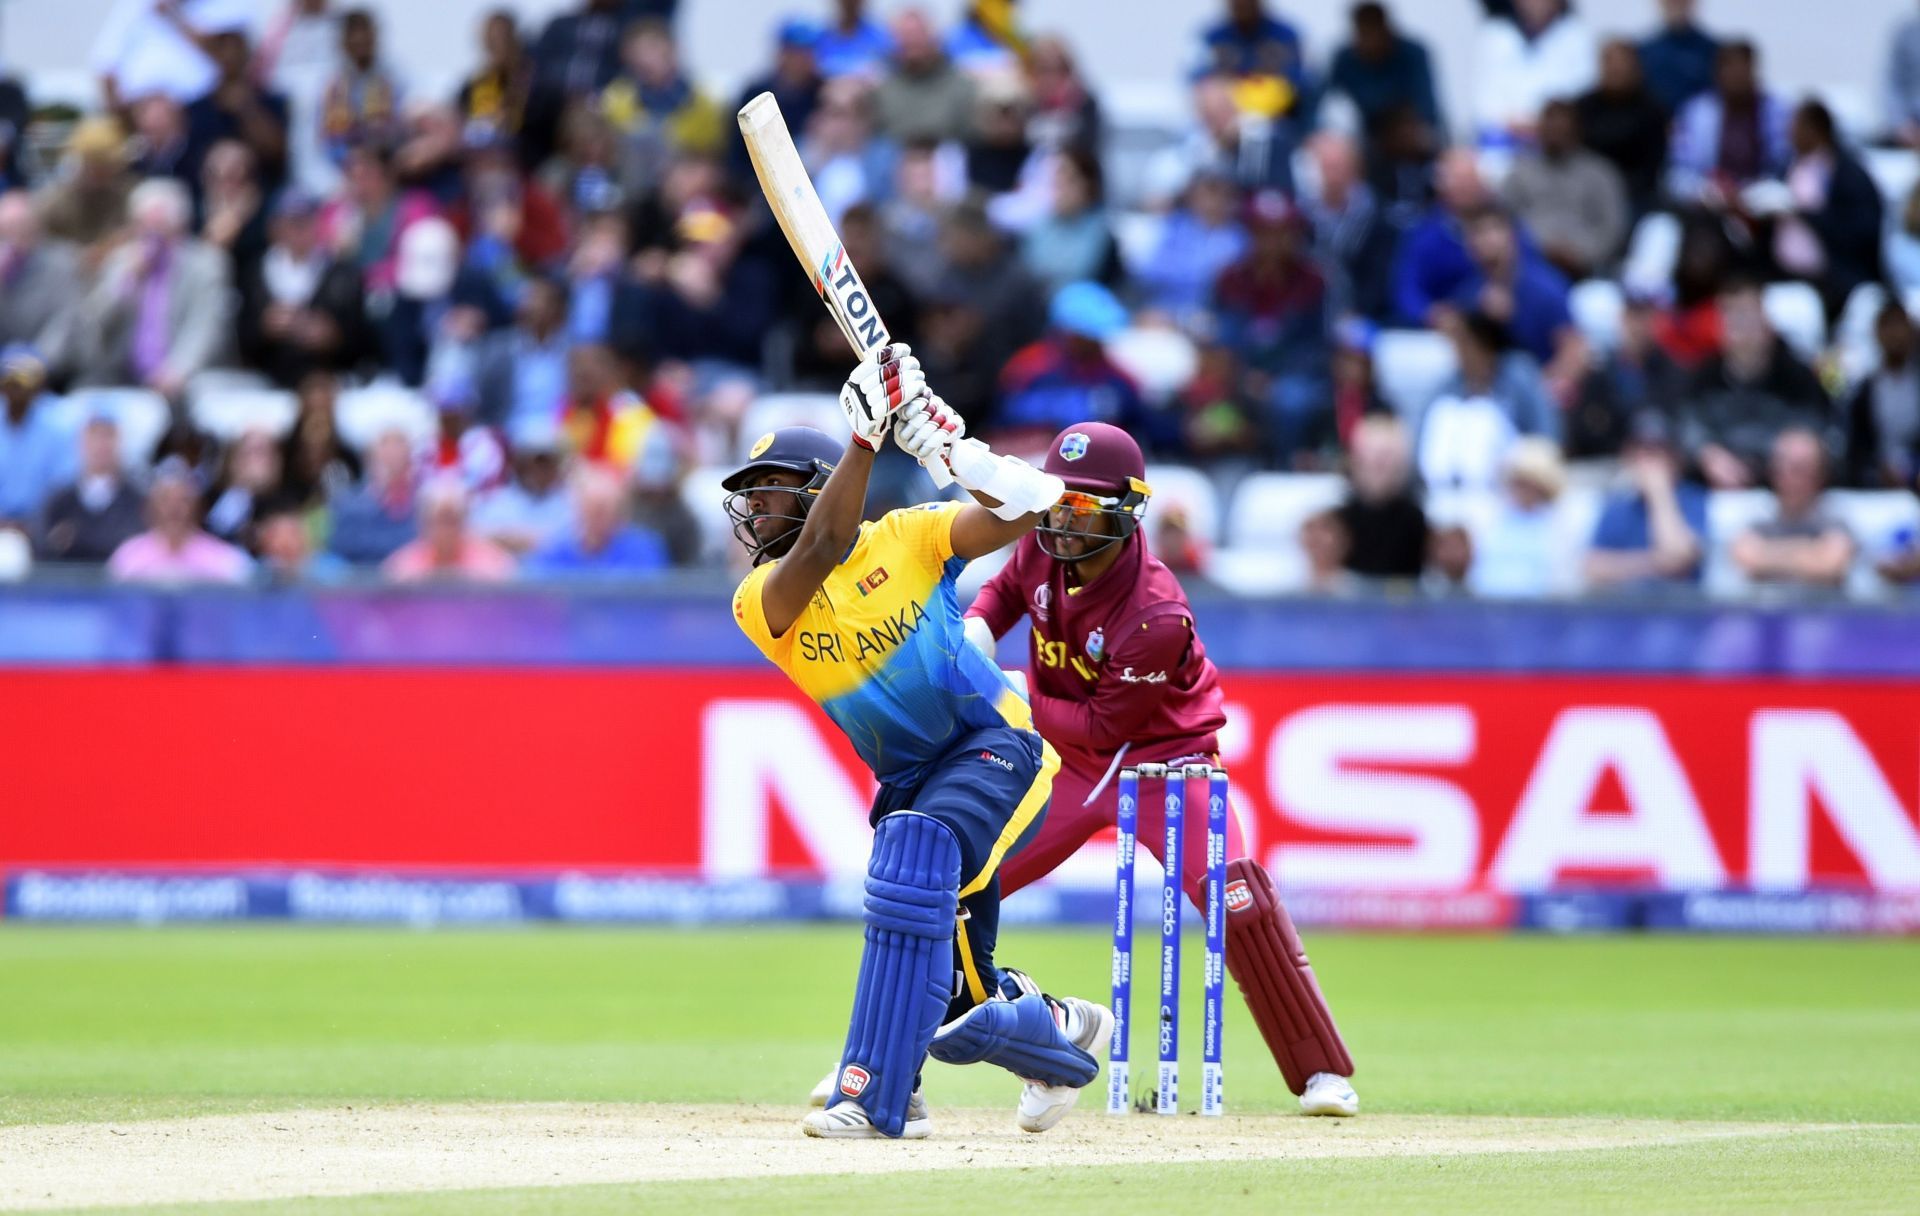 Avishka Fernando will be keen to play a big knock in the West Indies vs Sri Lanka match